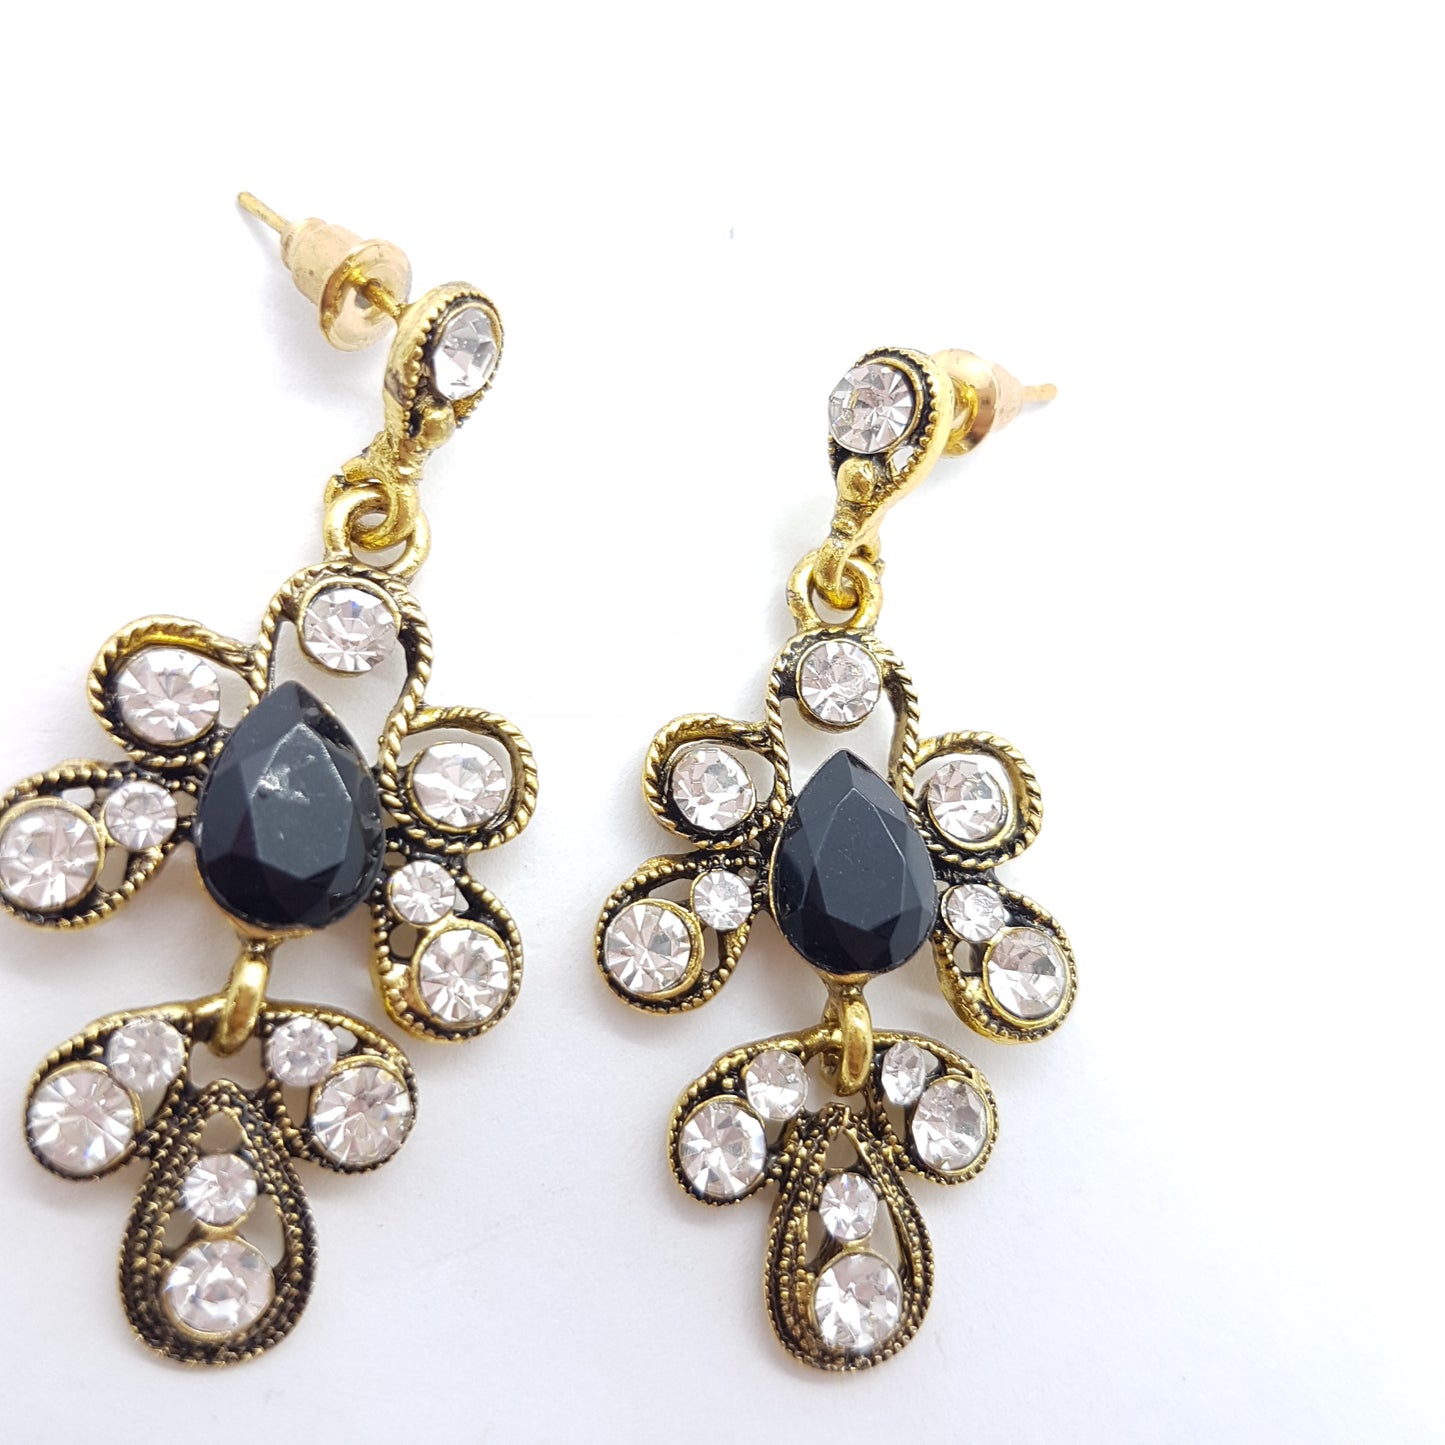 Antique Style Black Rhinestone Earrings